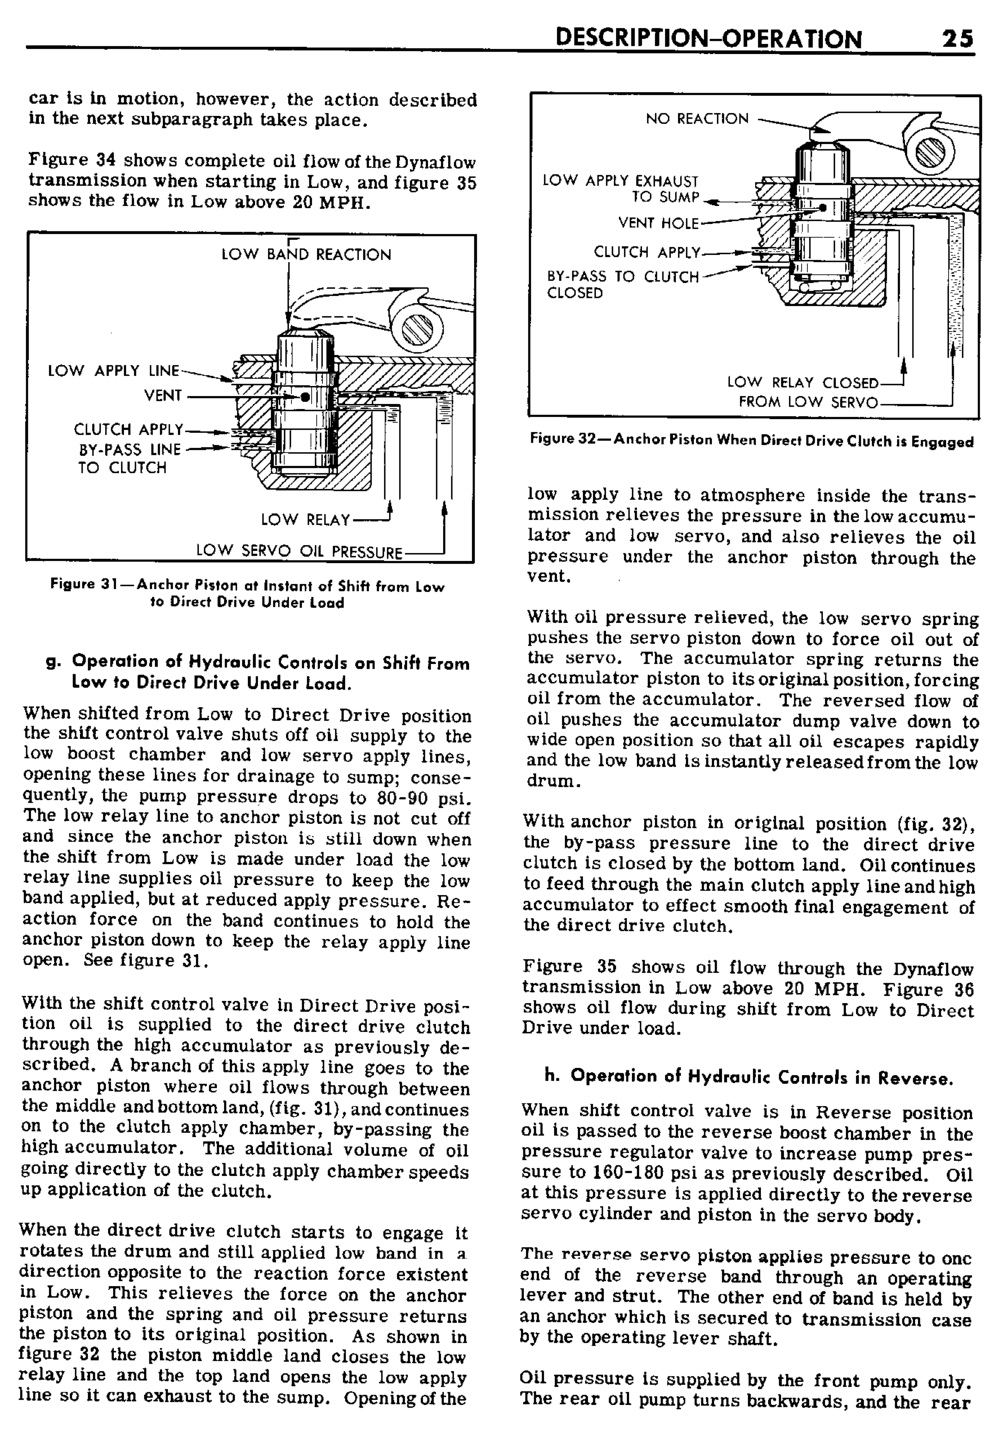 n_02 1948 Buick Transmission - Descr & Oper-019-019.jpg